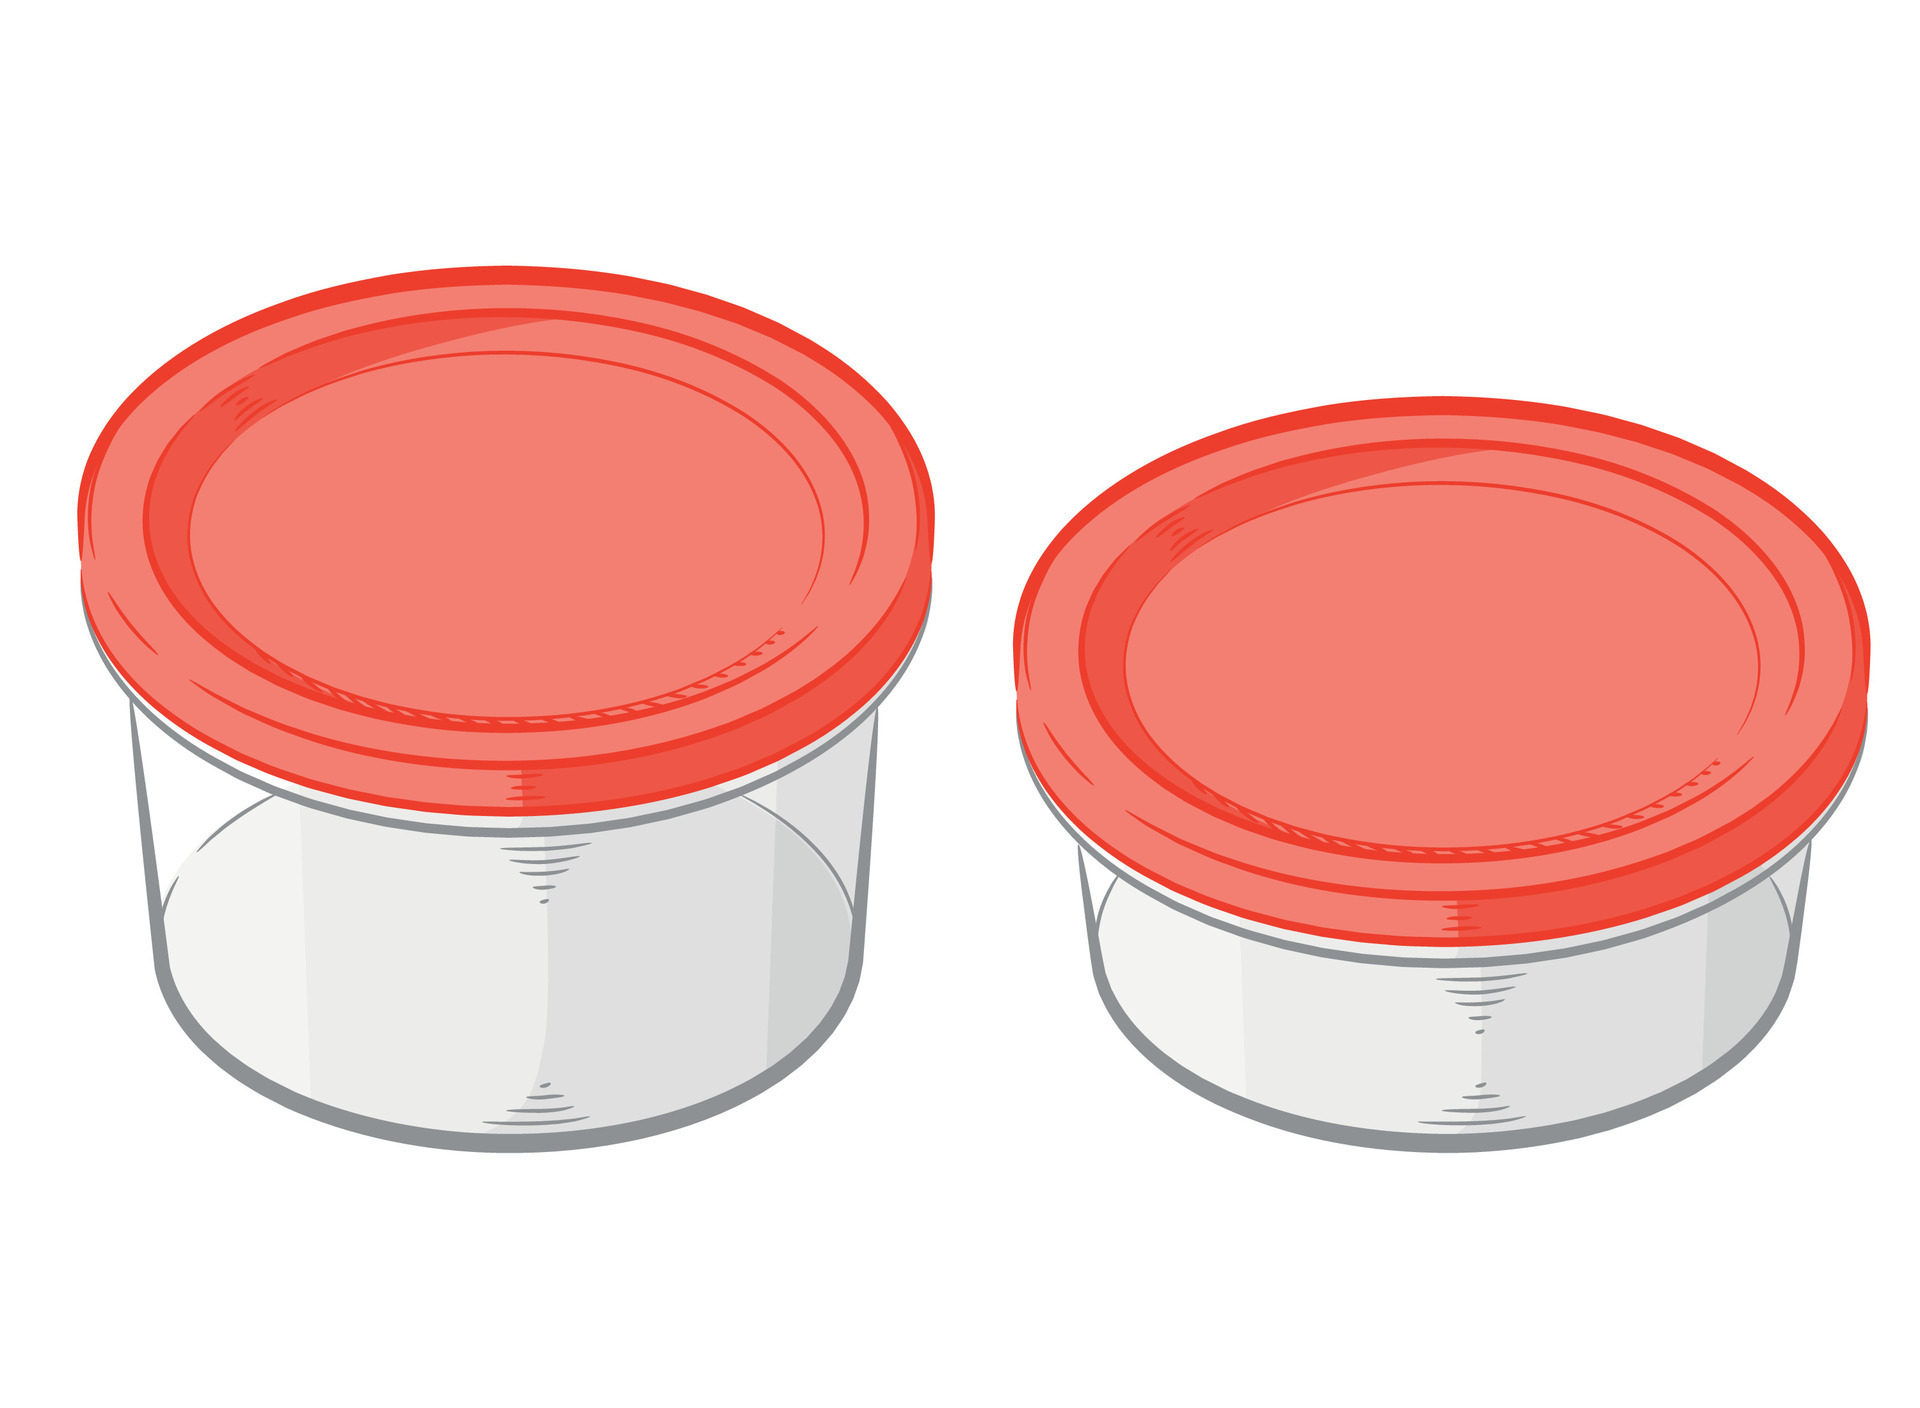 https://static.vecteezy.com/system/resources/previews/027/565/549/original/food-storage-box-round-container-cartoon-vector.jpg